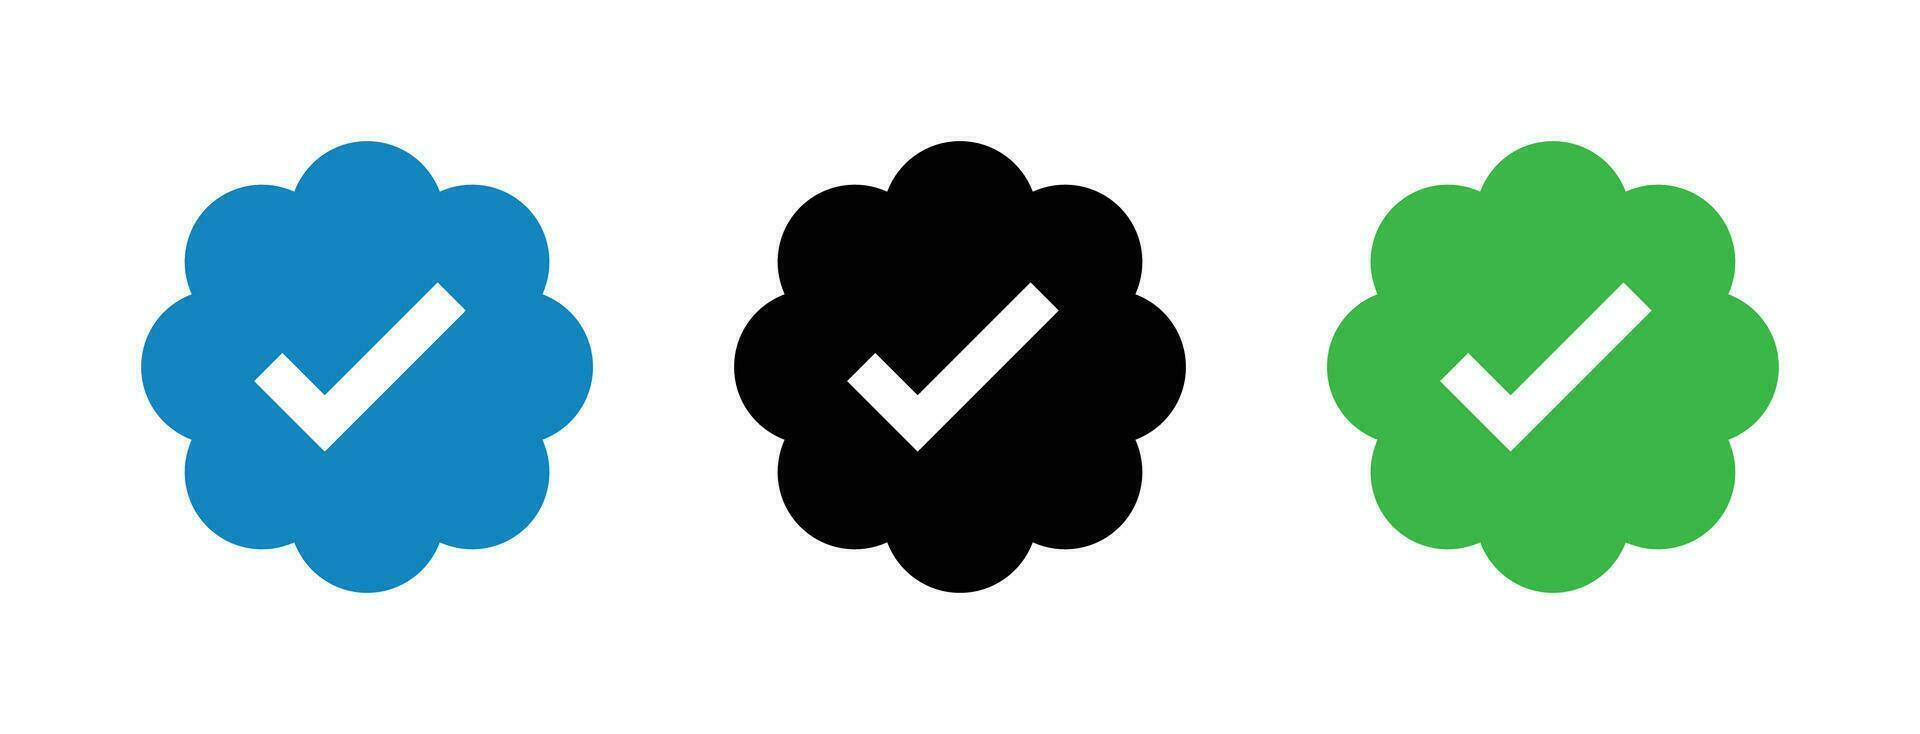 X Verified Badge Icons Set - Social Media Verification Symbols Vector